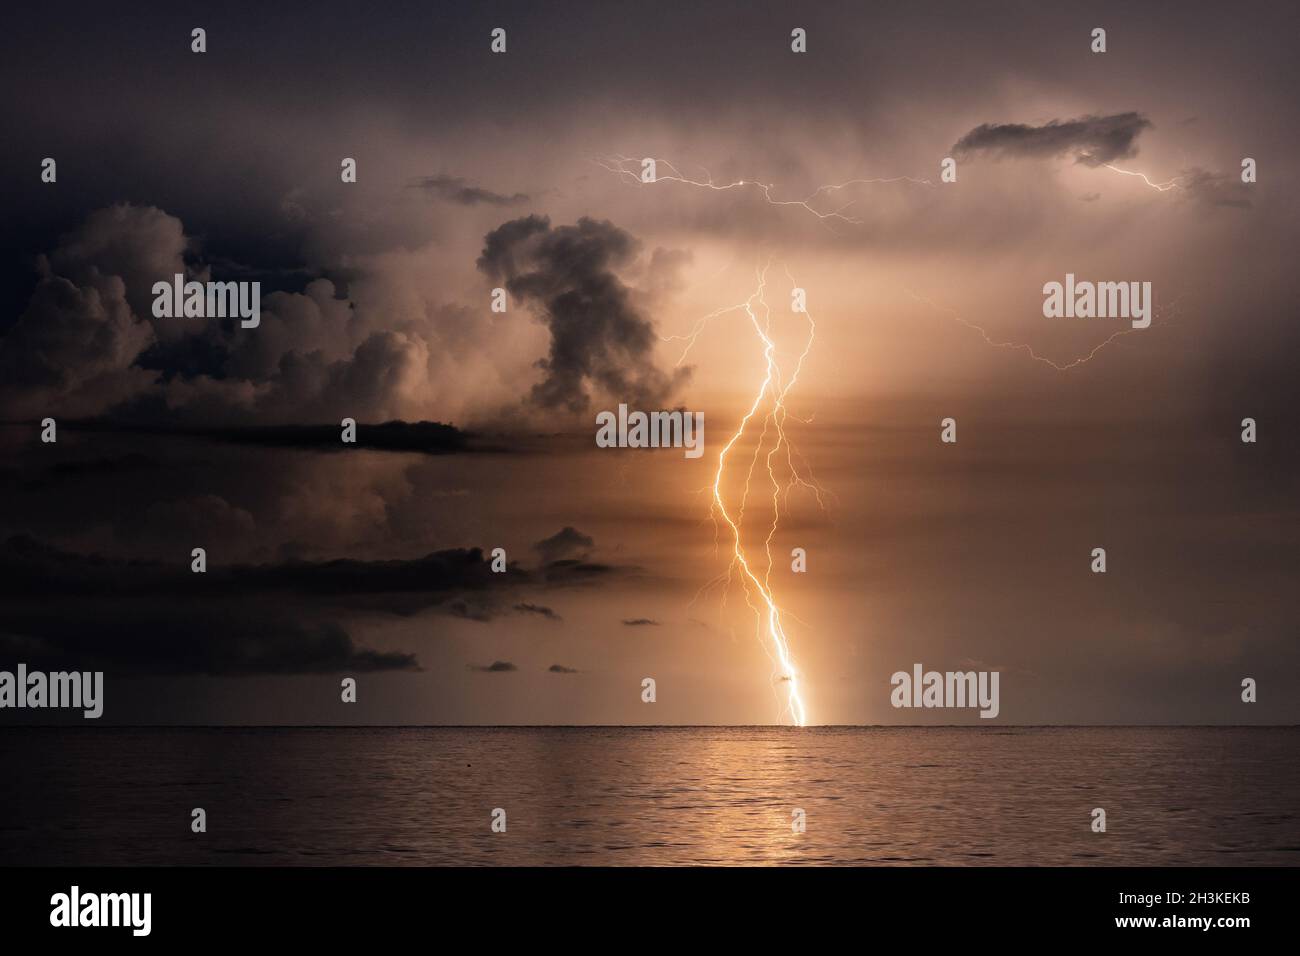 Beautiful scenery of the lightning over a lake at sunset, Miramar Beach, Florida Stock Photo